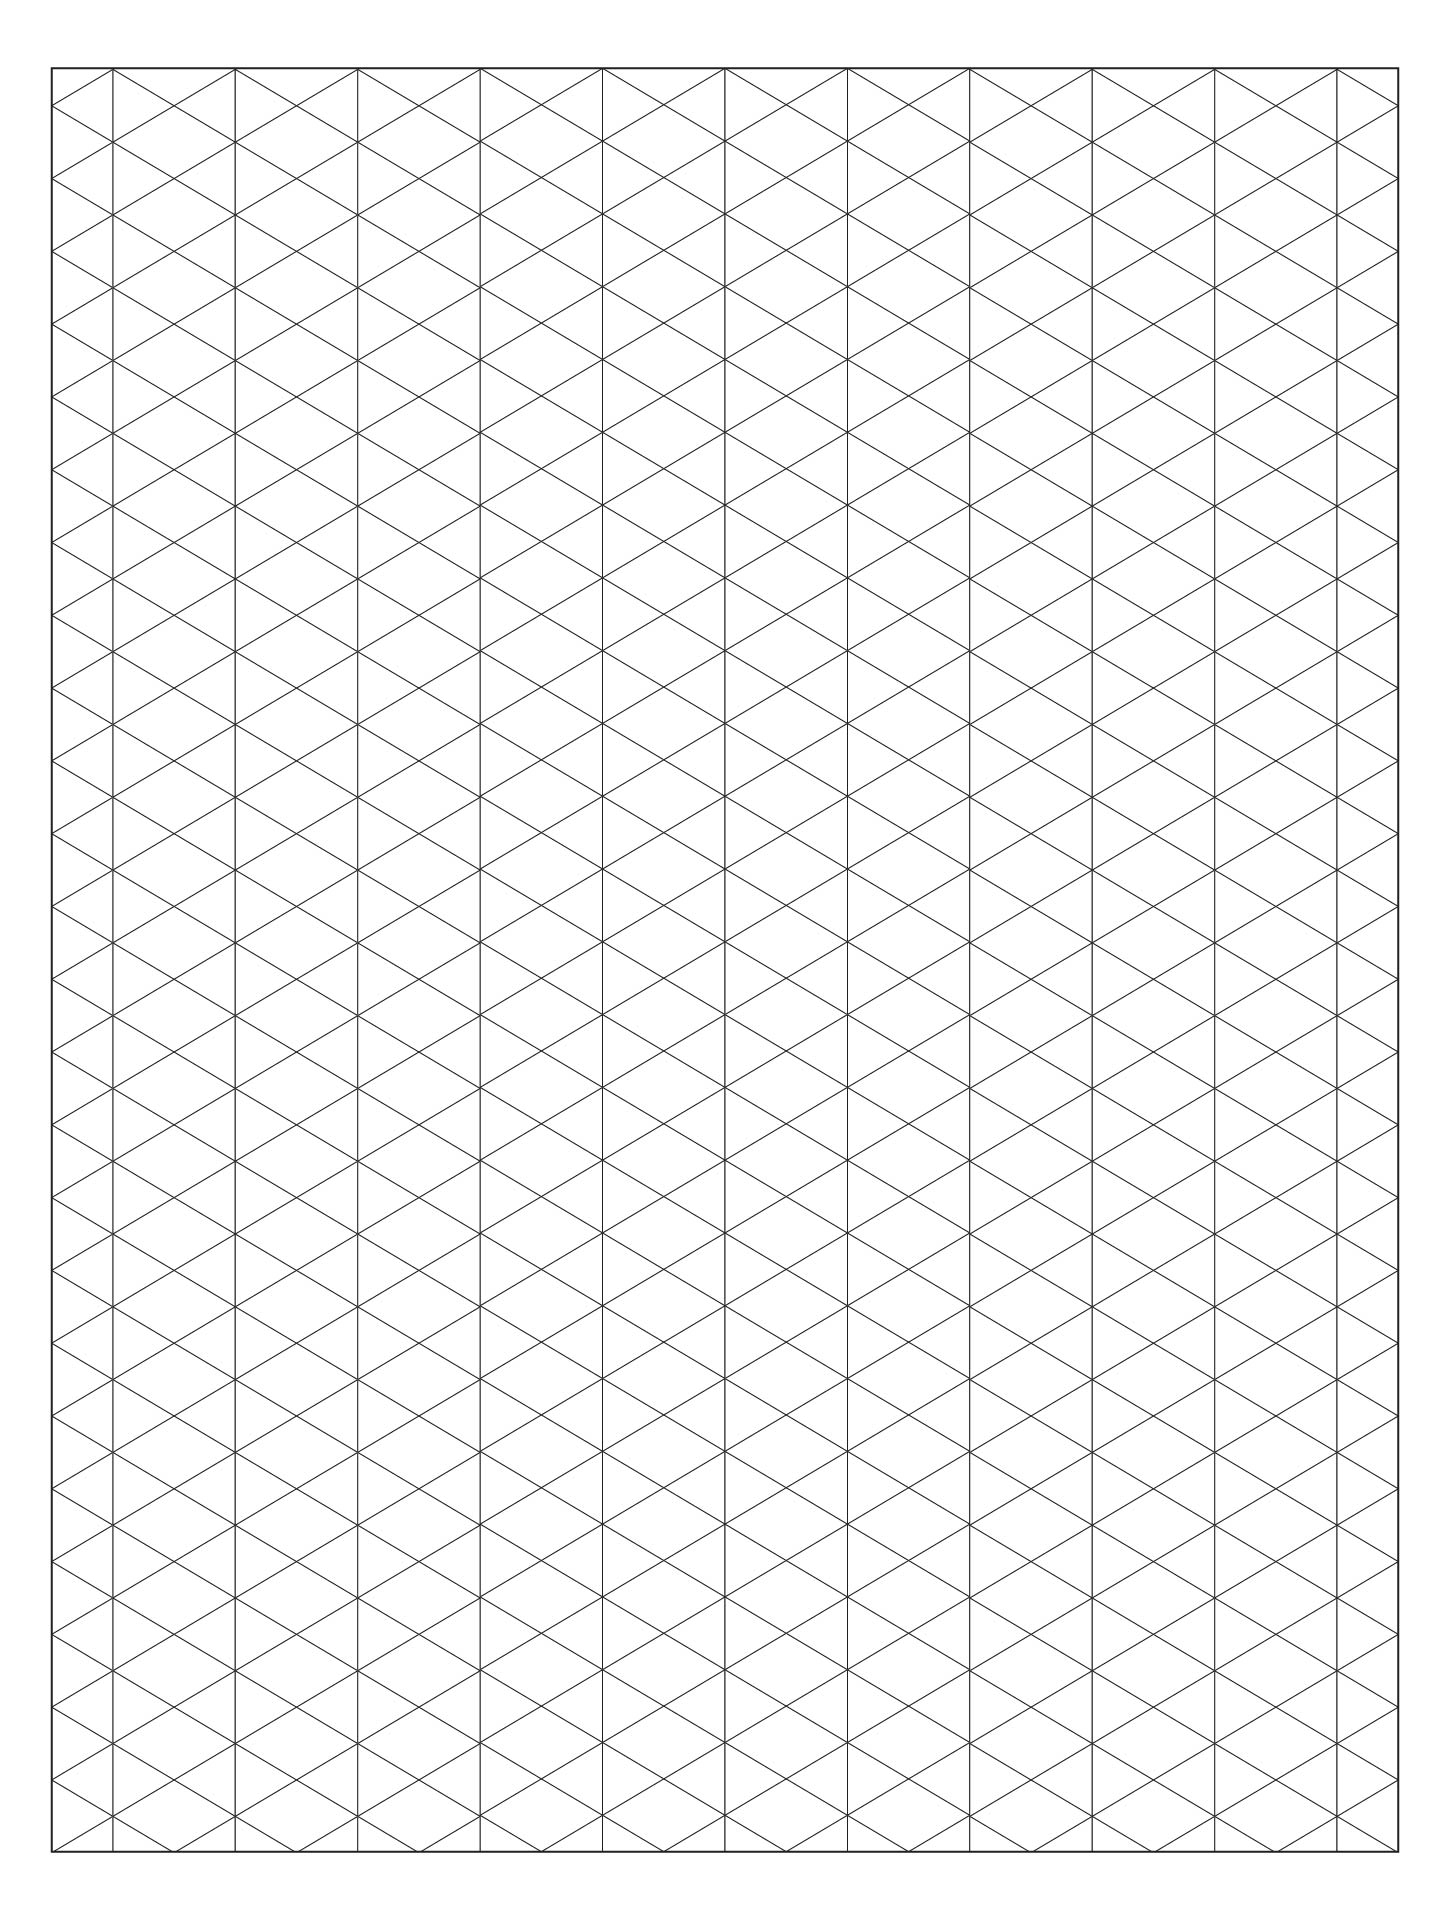 Printable Isometric Grid Paper